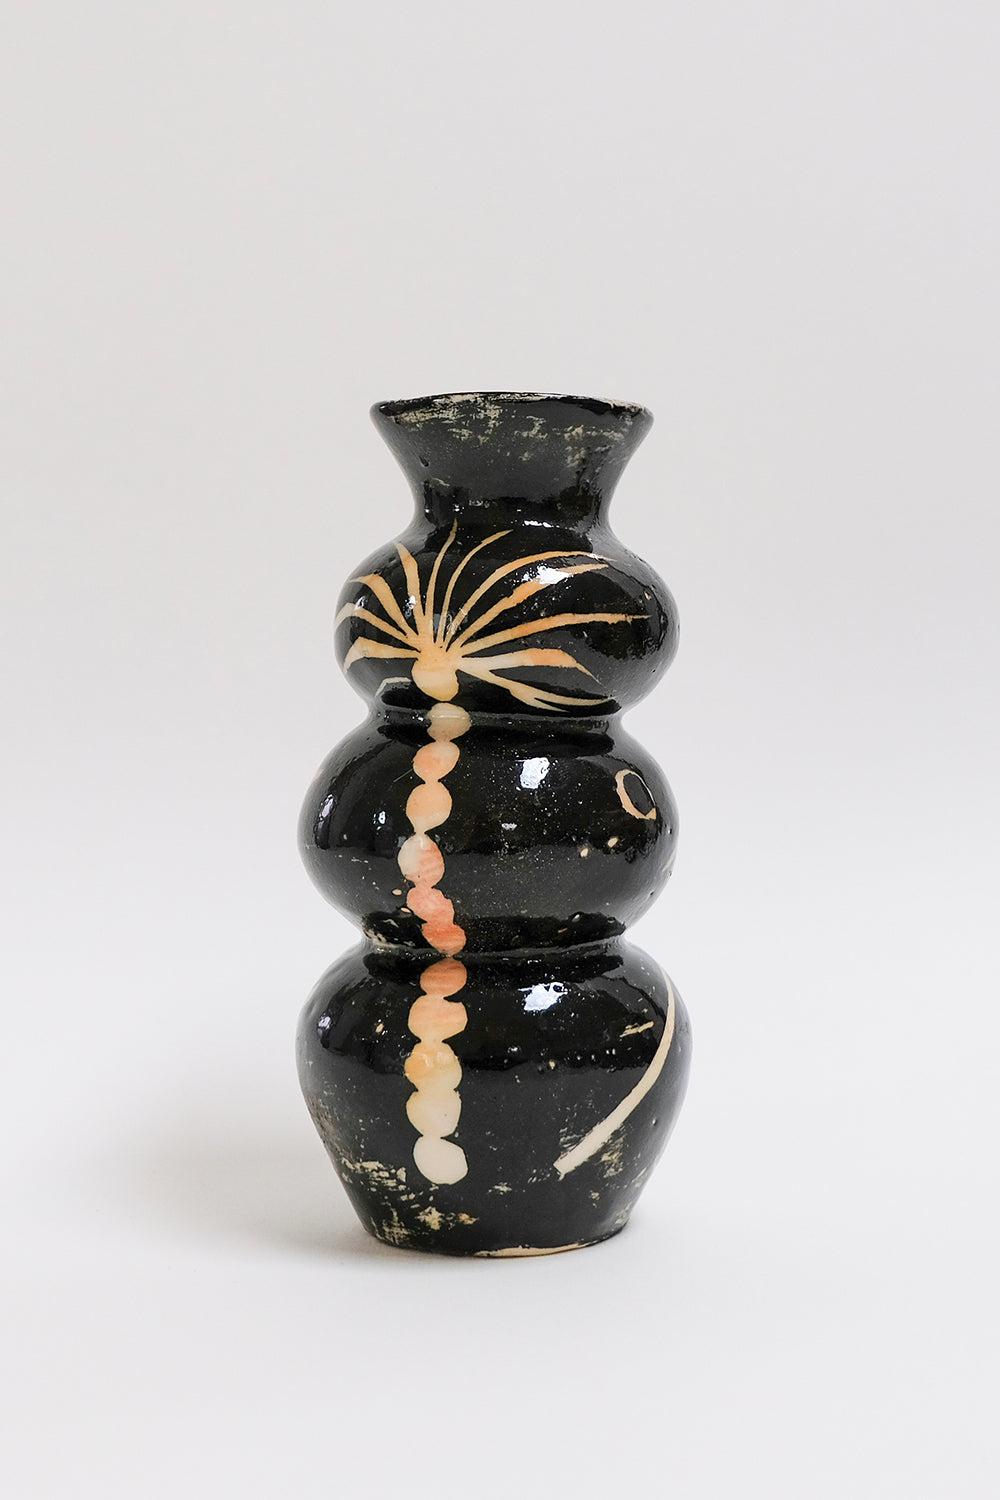 Mur Vessel 4 - contemporary ceramic functional art vase, wheel thrown hand built For Sale 1